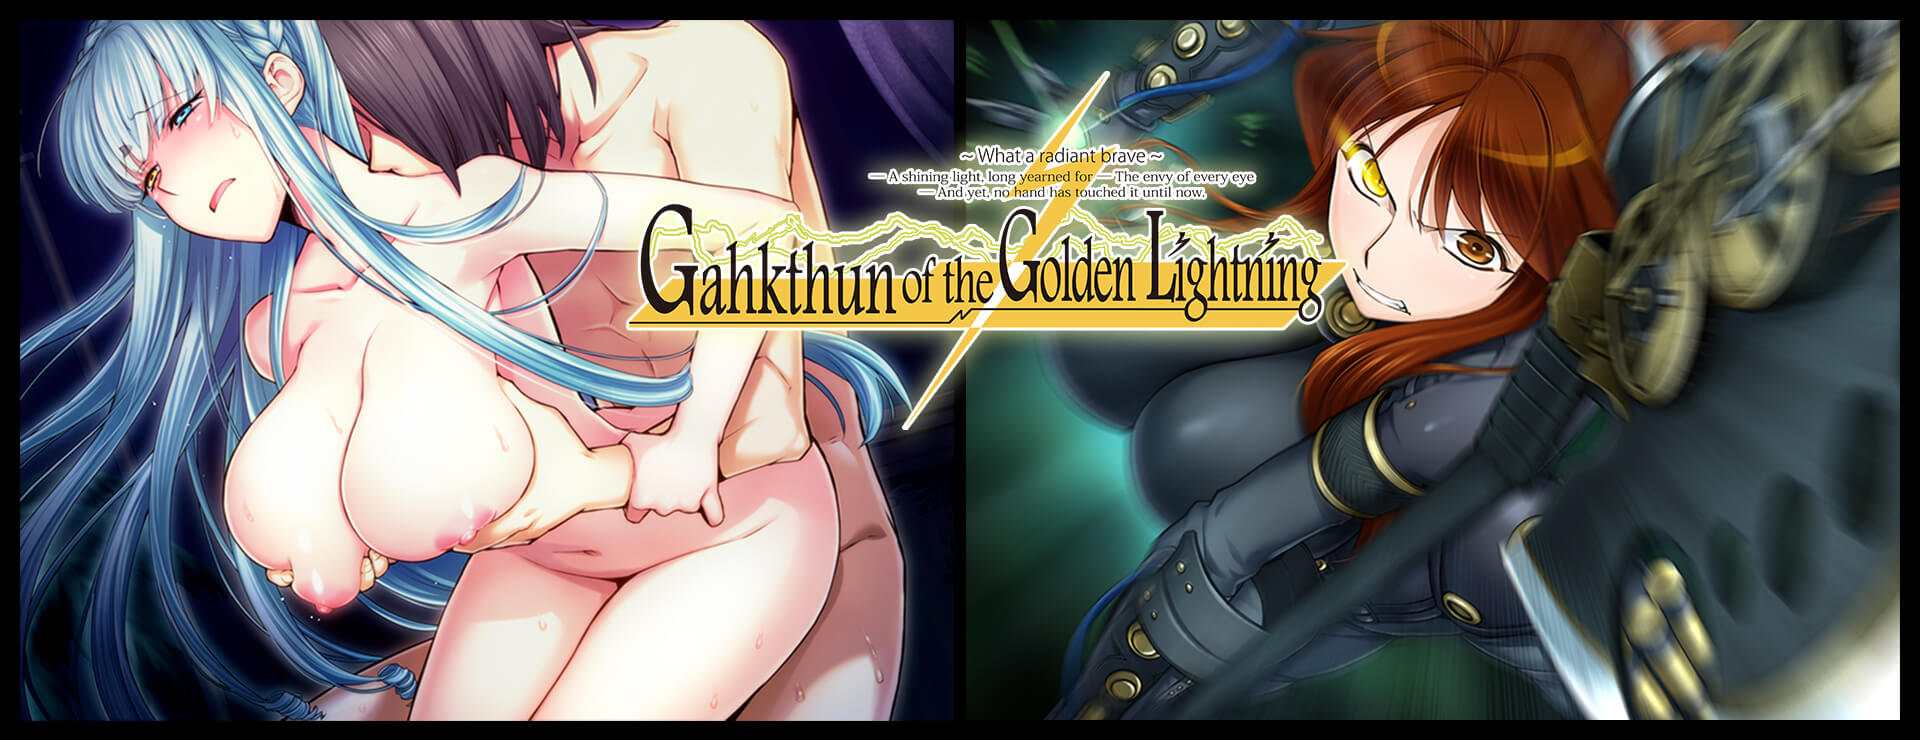 Gahkthun of the Golden Lightning - ビジュアルノベル ゲーム